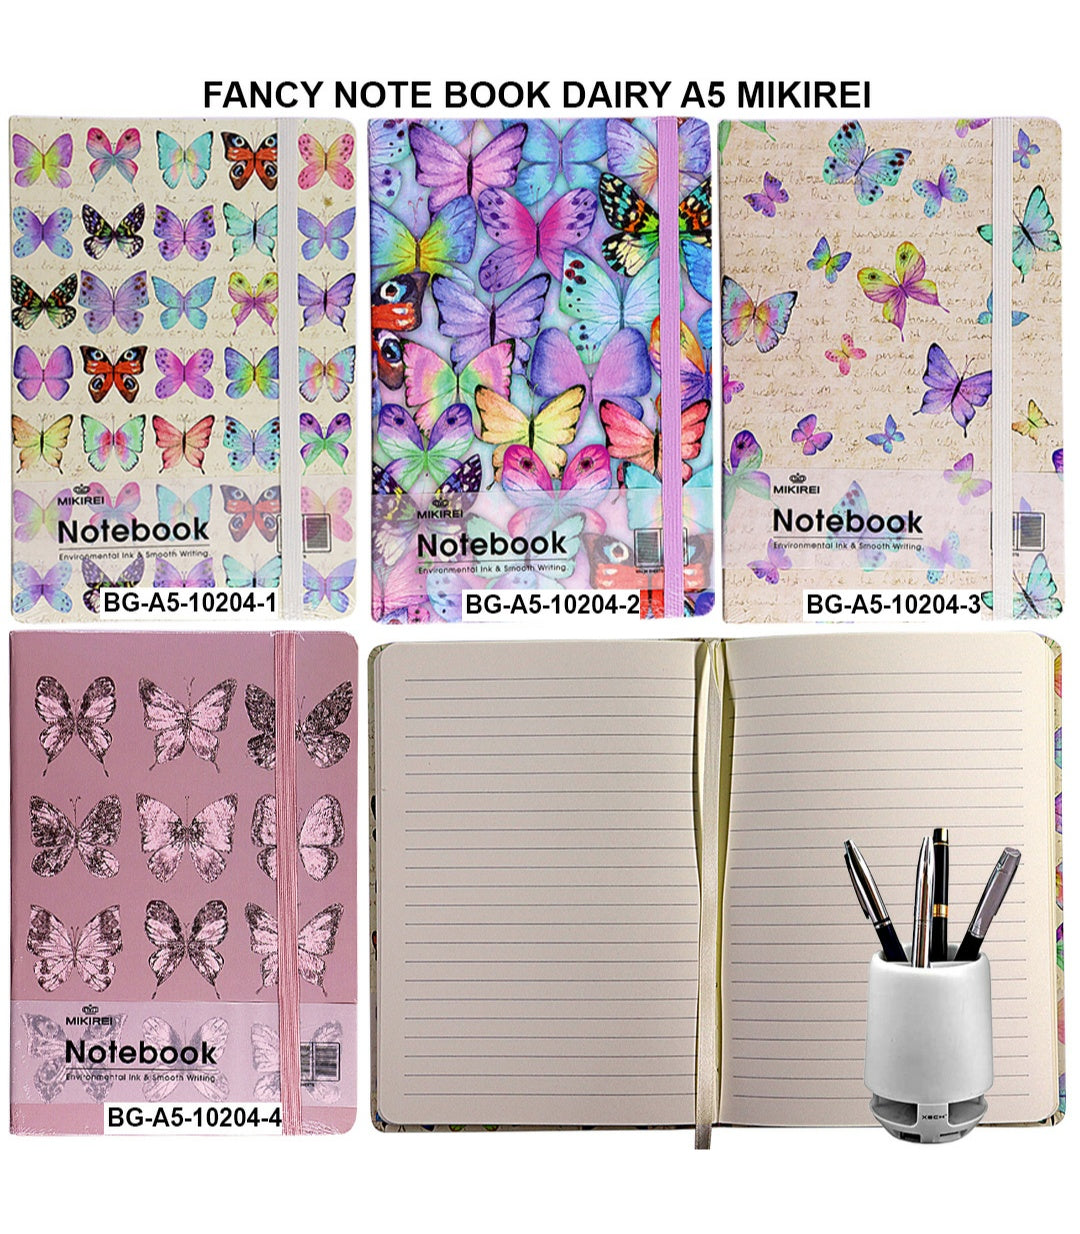 Note Book Dairy A5 Mikirei A5-10204 | INKARTO